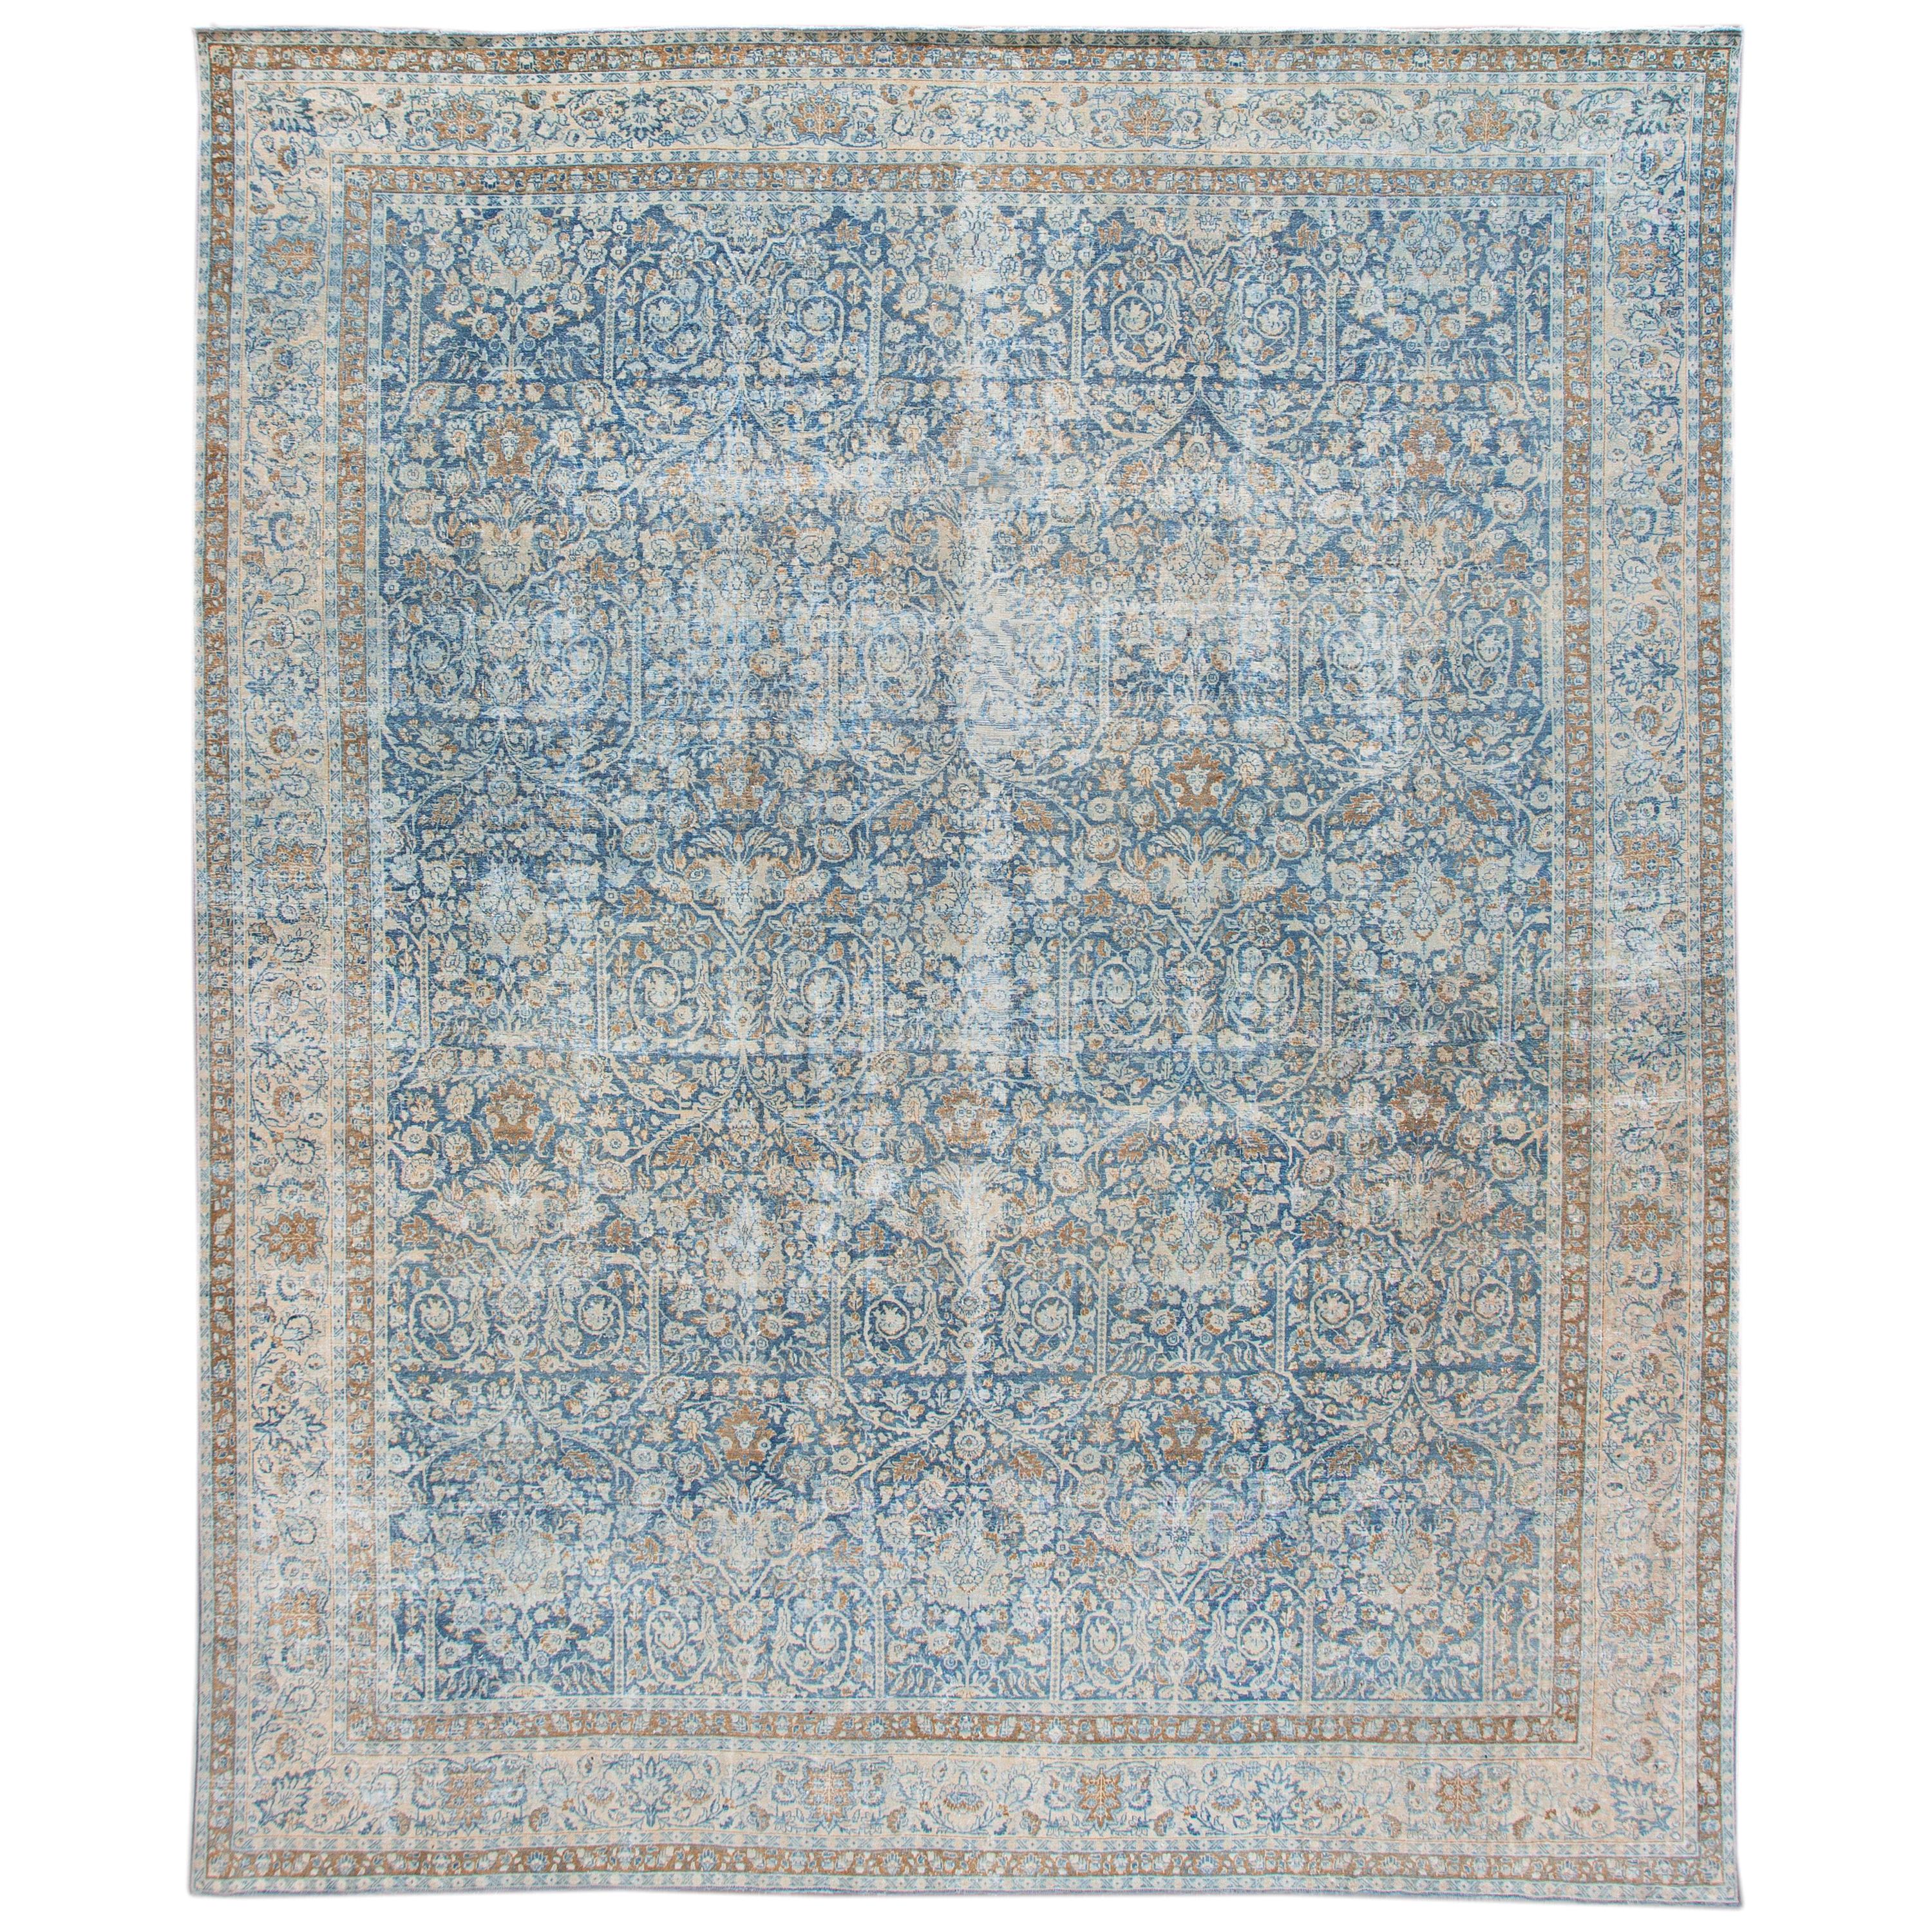 Antique Shabby Chic Blue Tabriz Handmade Oversize Wool Rug For Sale